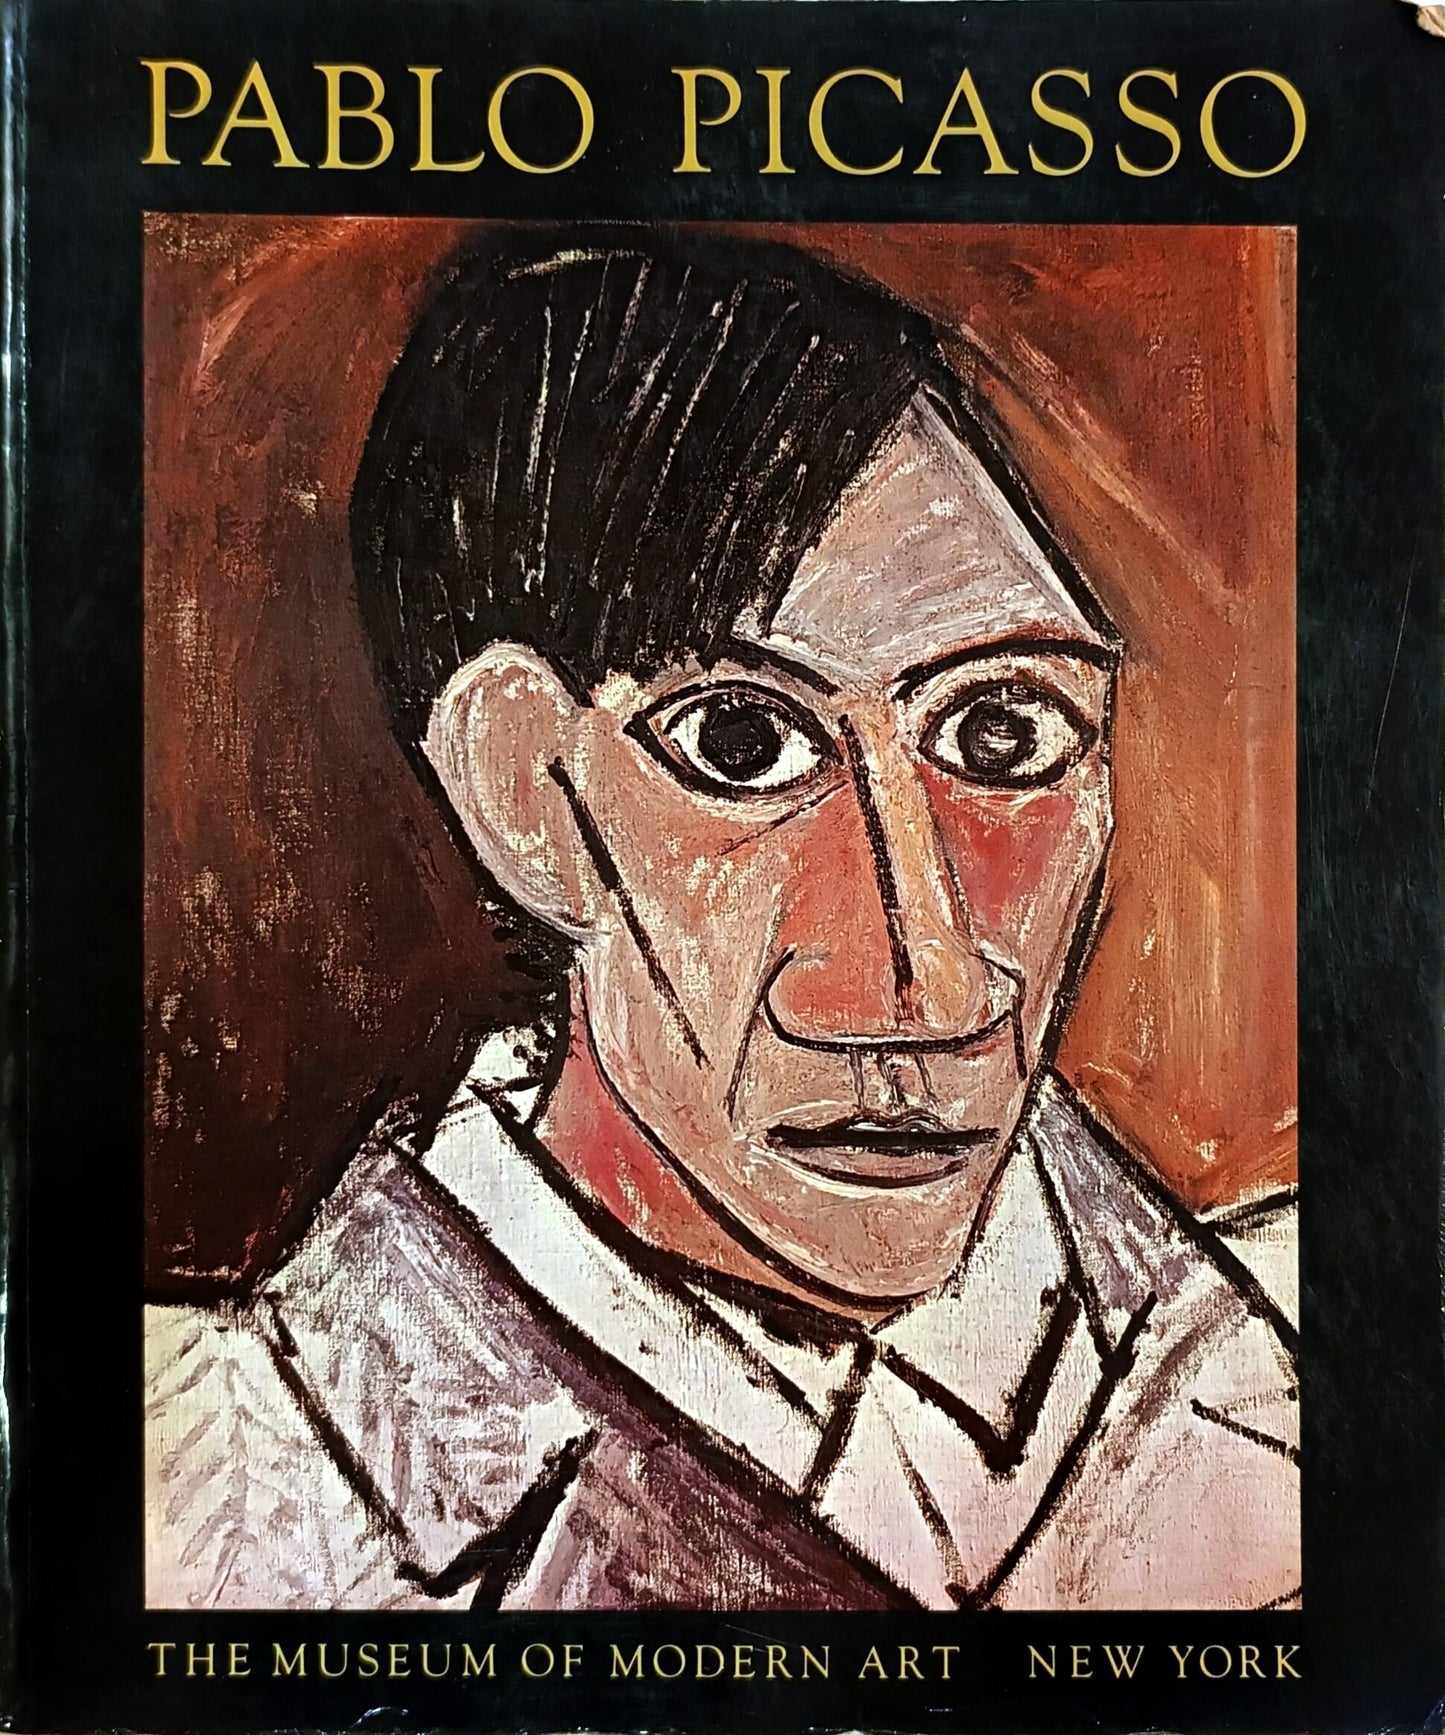 Pablo Picasso. A retrospective